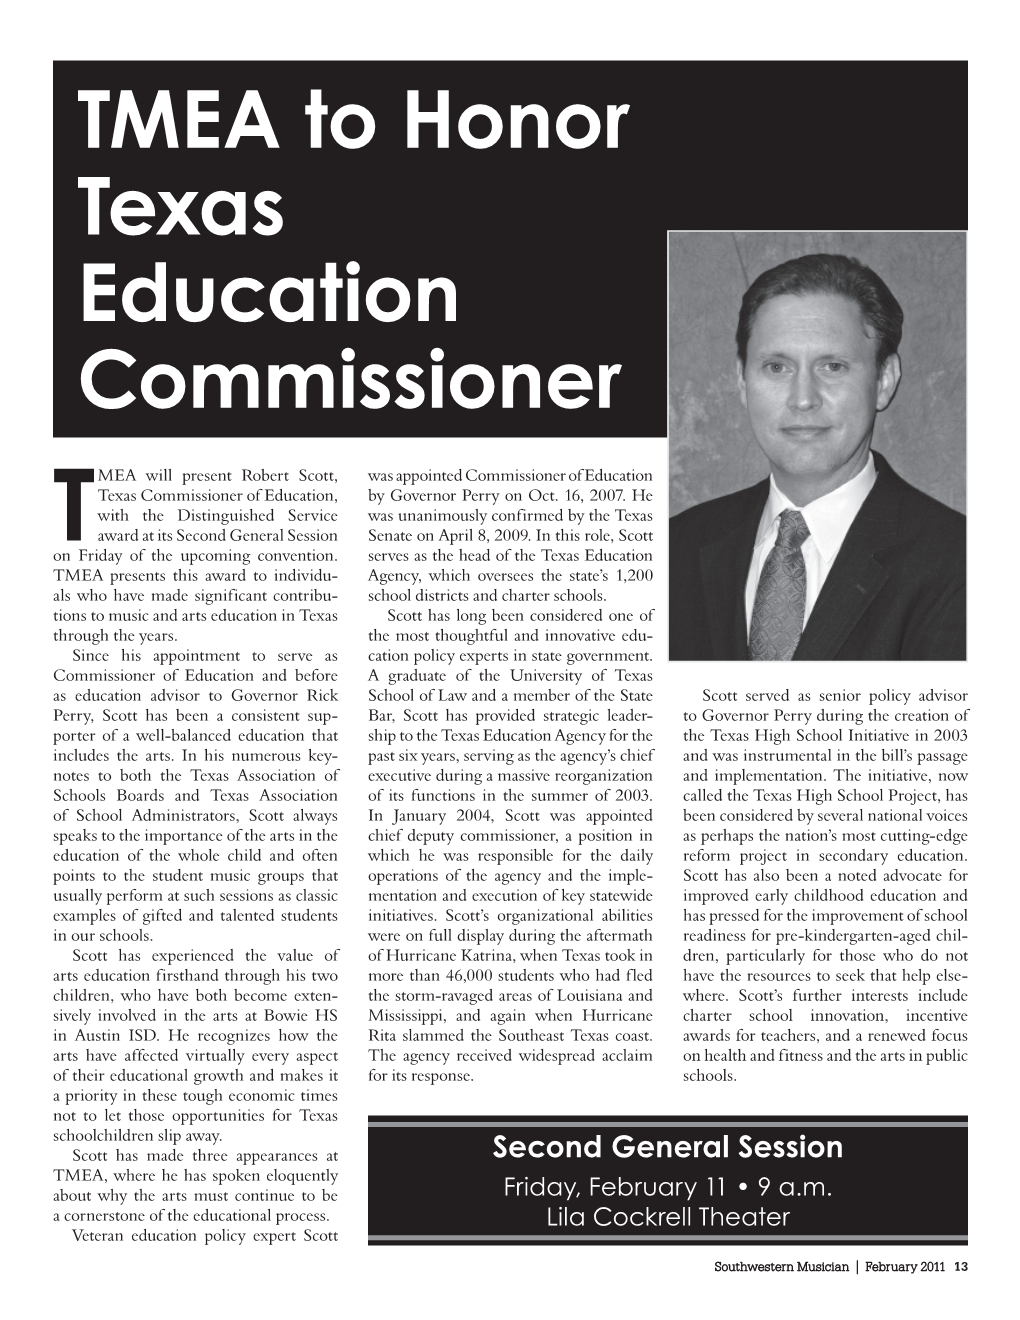 TMEA to Honor Texas Education Commissioner